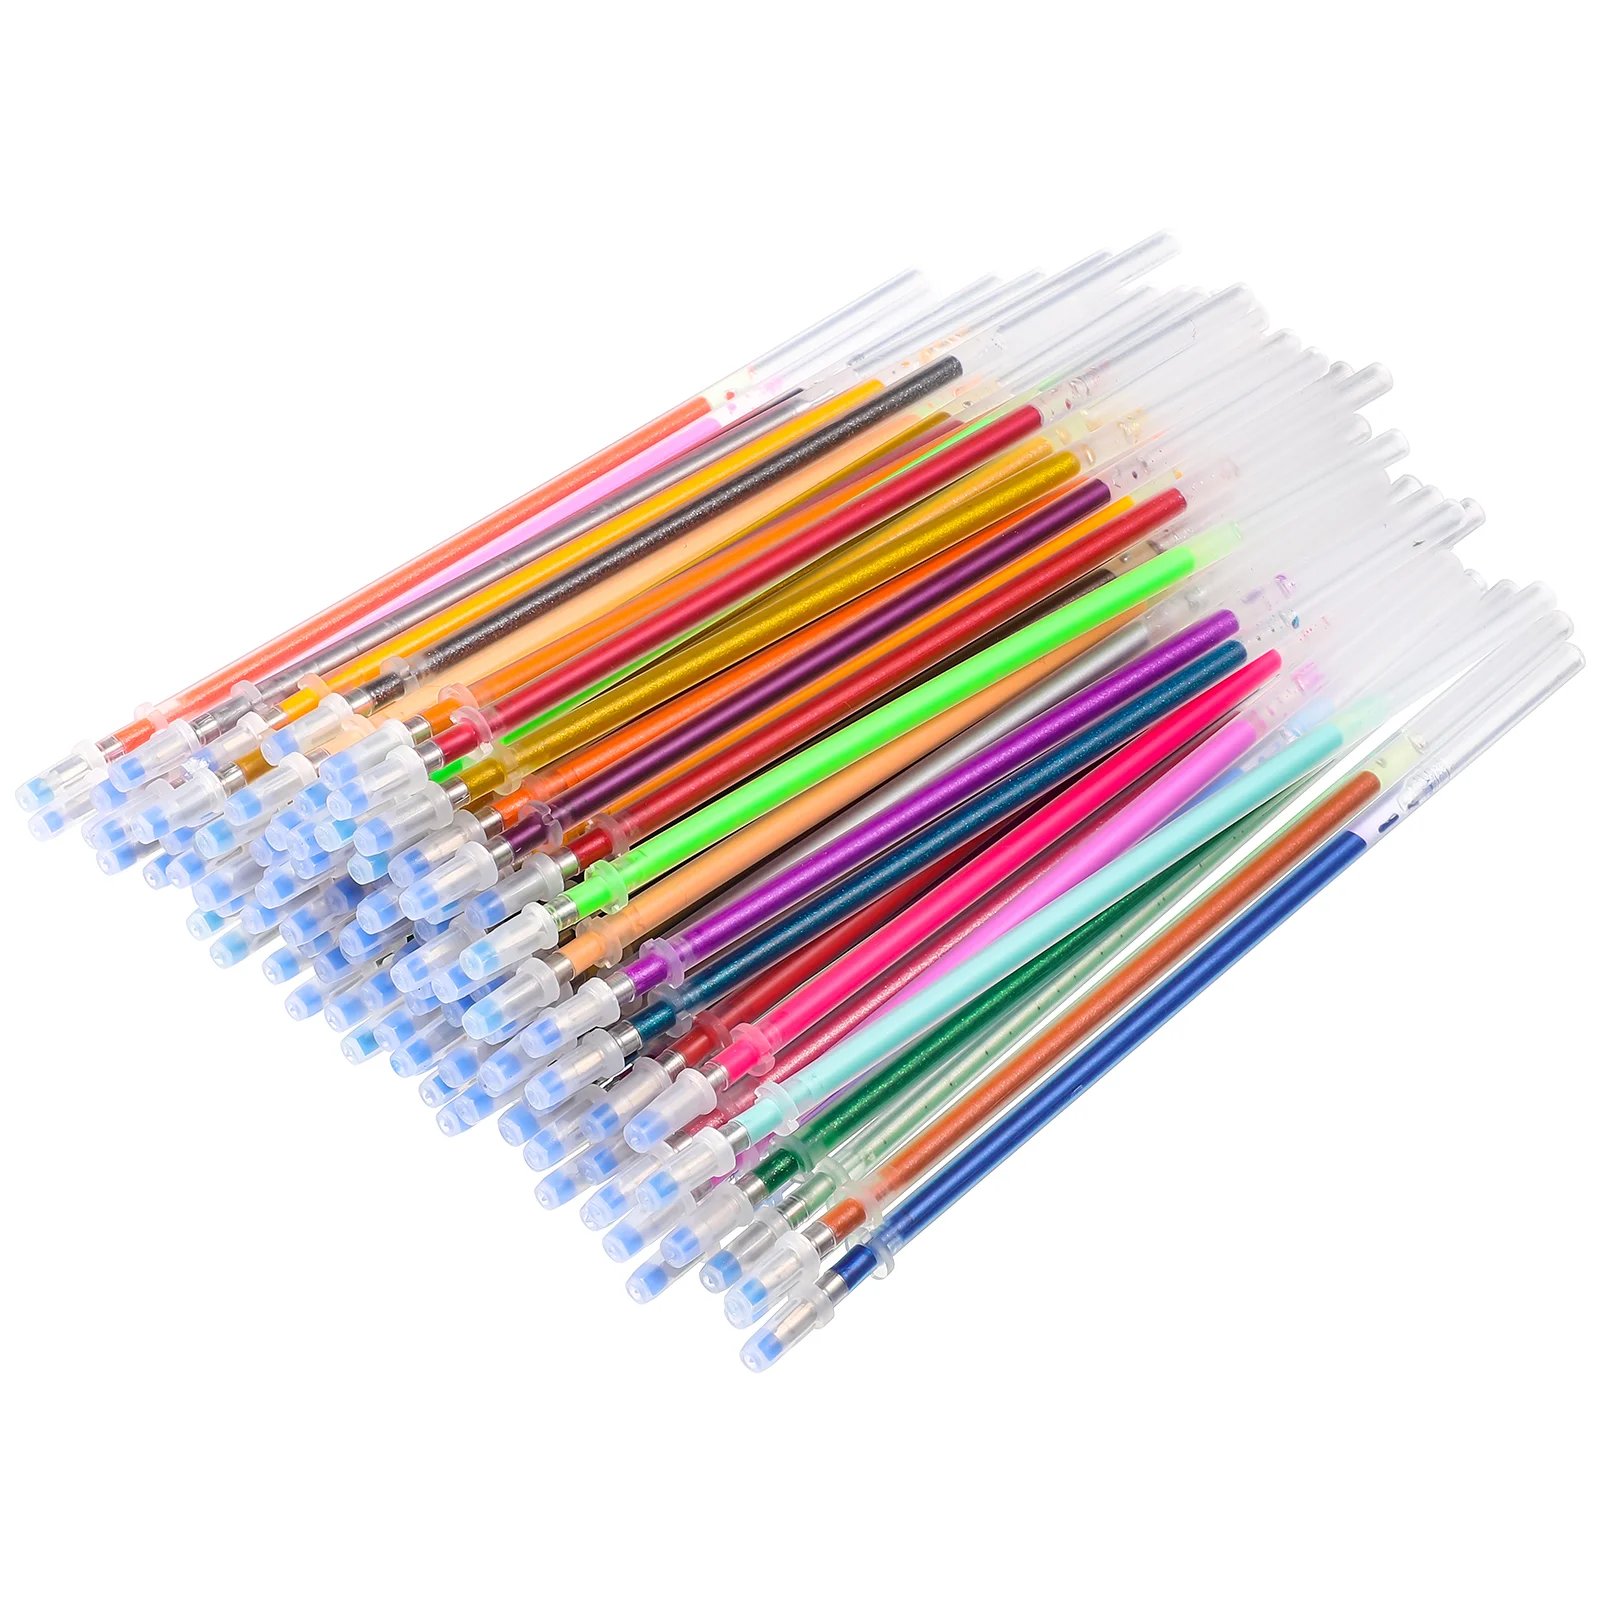 

TOYANDONA 100pcs Colored Gel Pen Refills Drawing Doodling Pen Refills Colorful Neutral Pen Refills Replacements (Mixed Color)